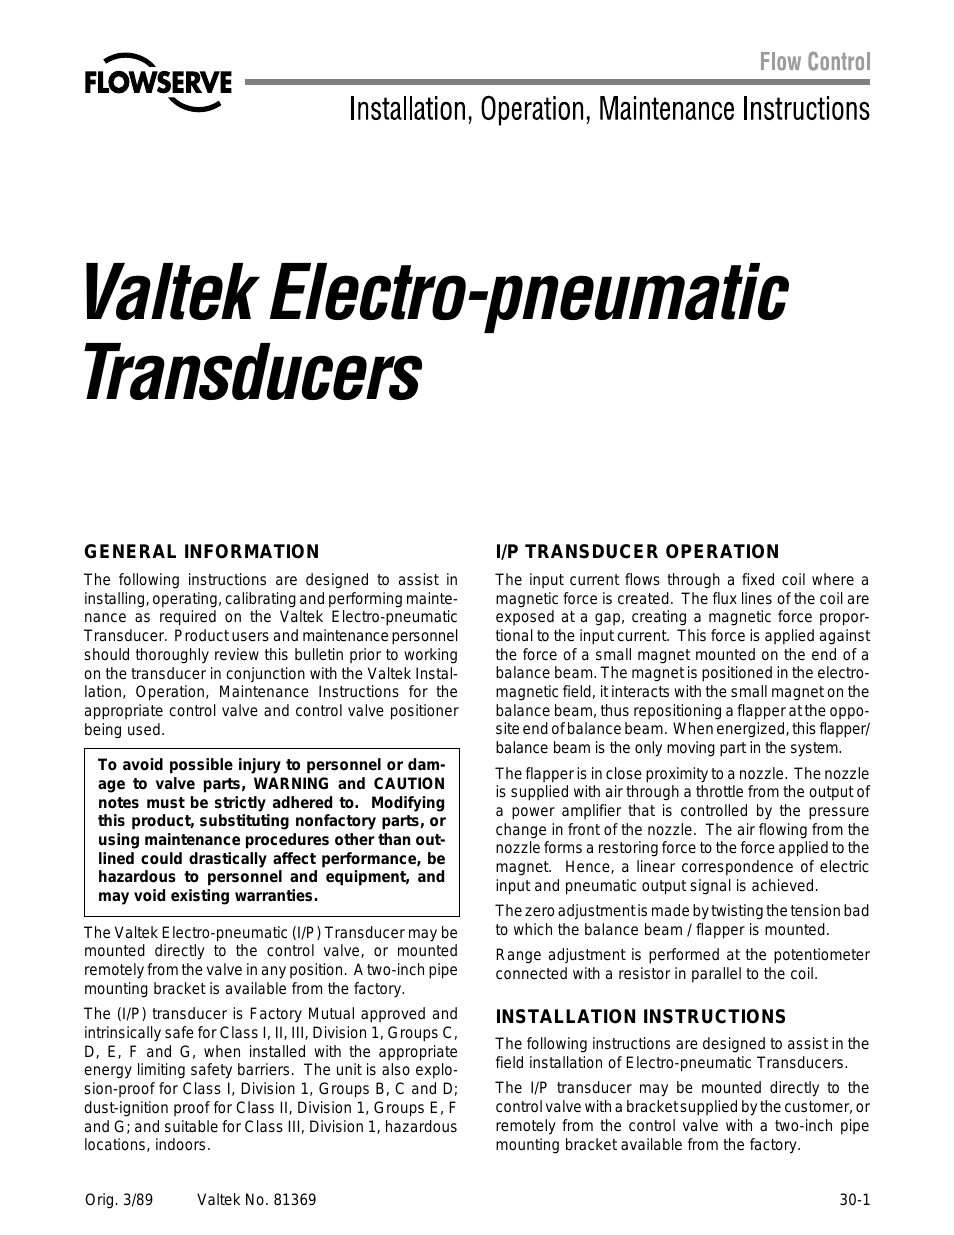 Electro-pneumatic Transducers